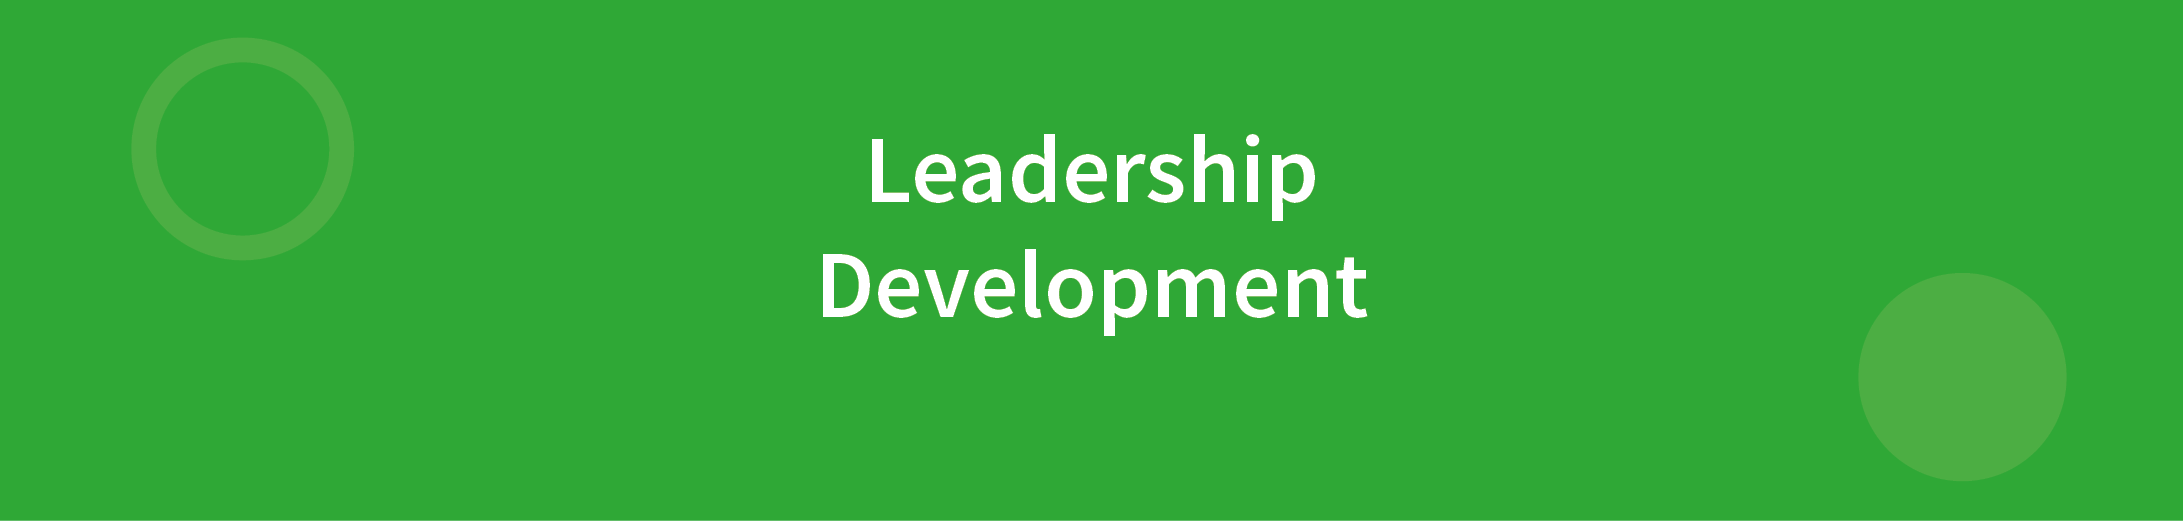 Leadership Development written in white on green background